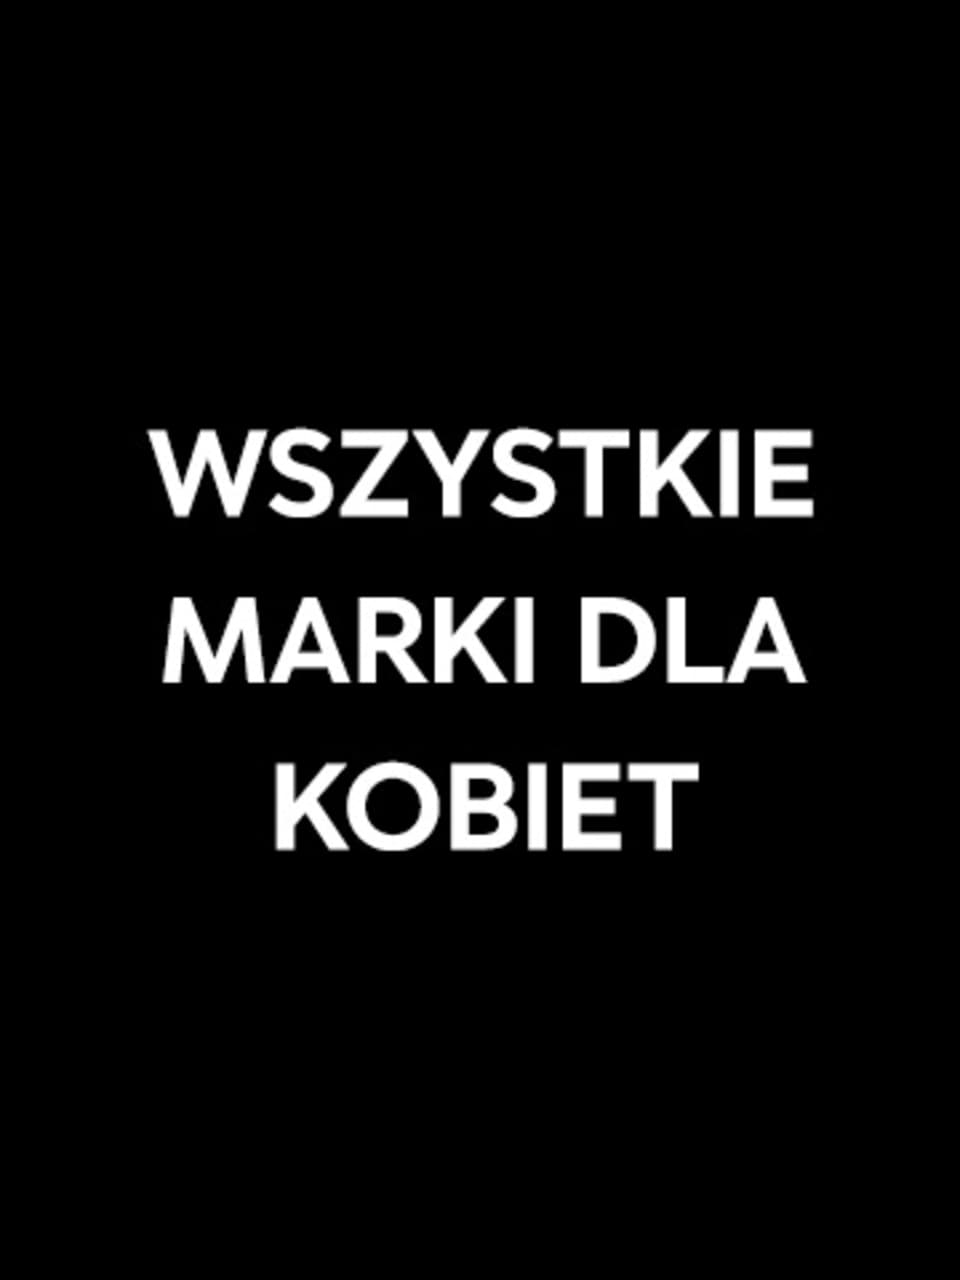 Damen Marken polnisch